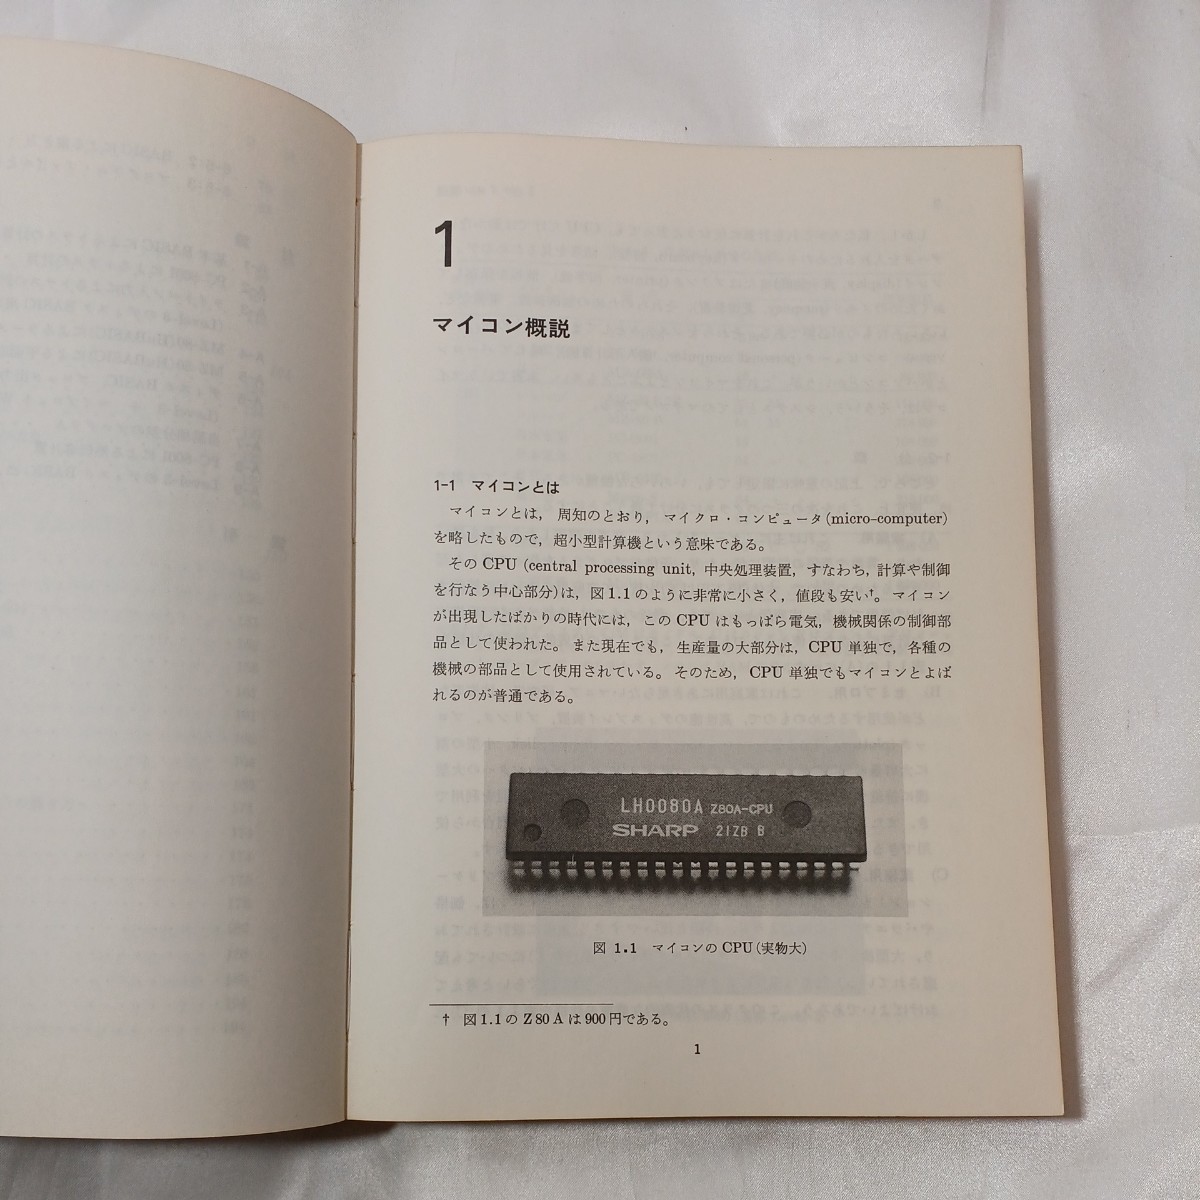 zaa-457♪マイコンによる有限要素解析 　 戸川 隼人 (著)　培風館 (1983/2/25)_画像5